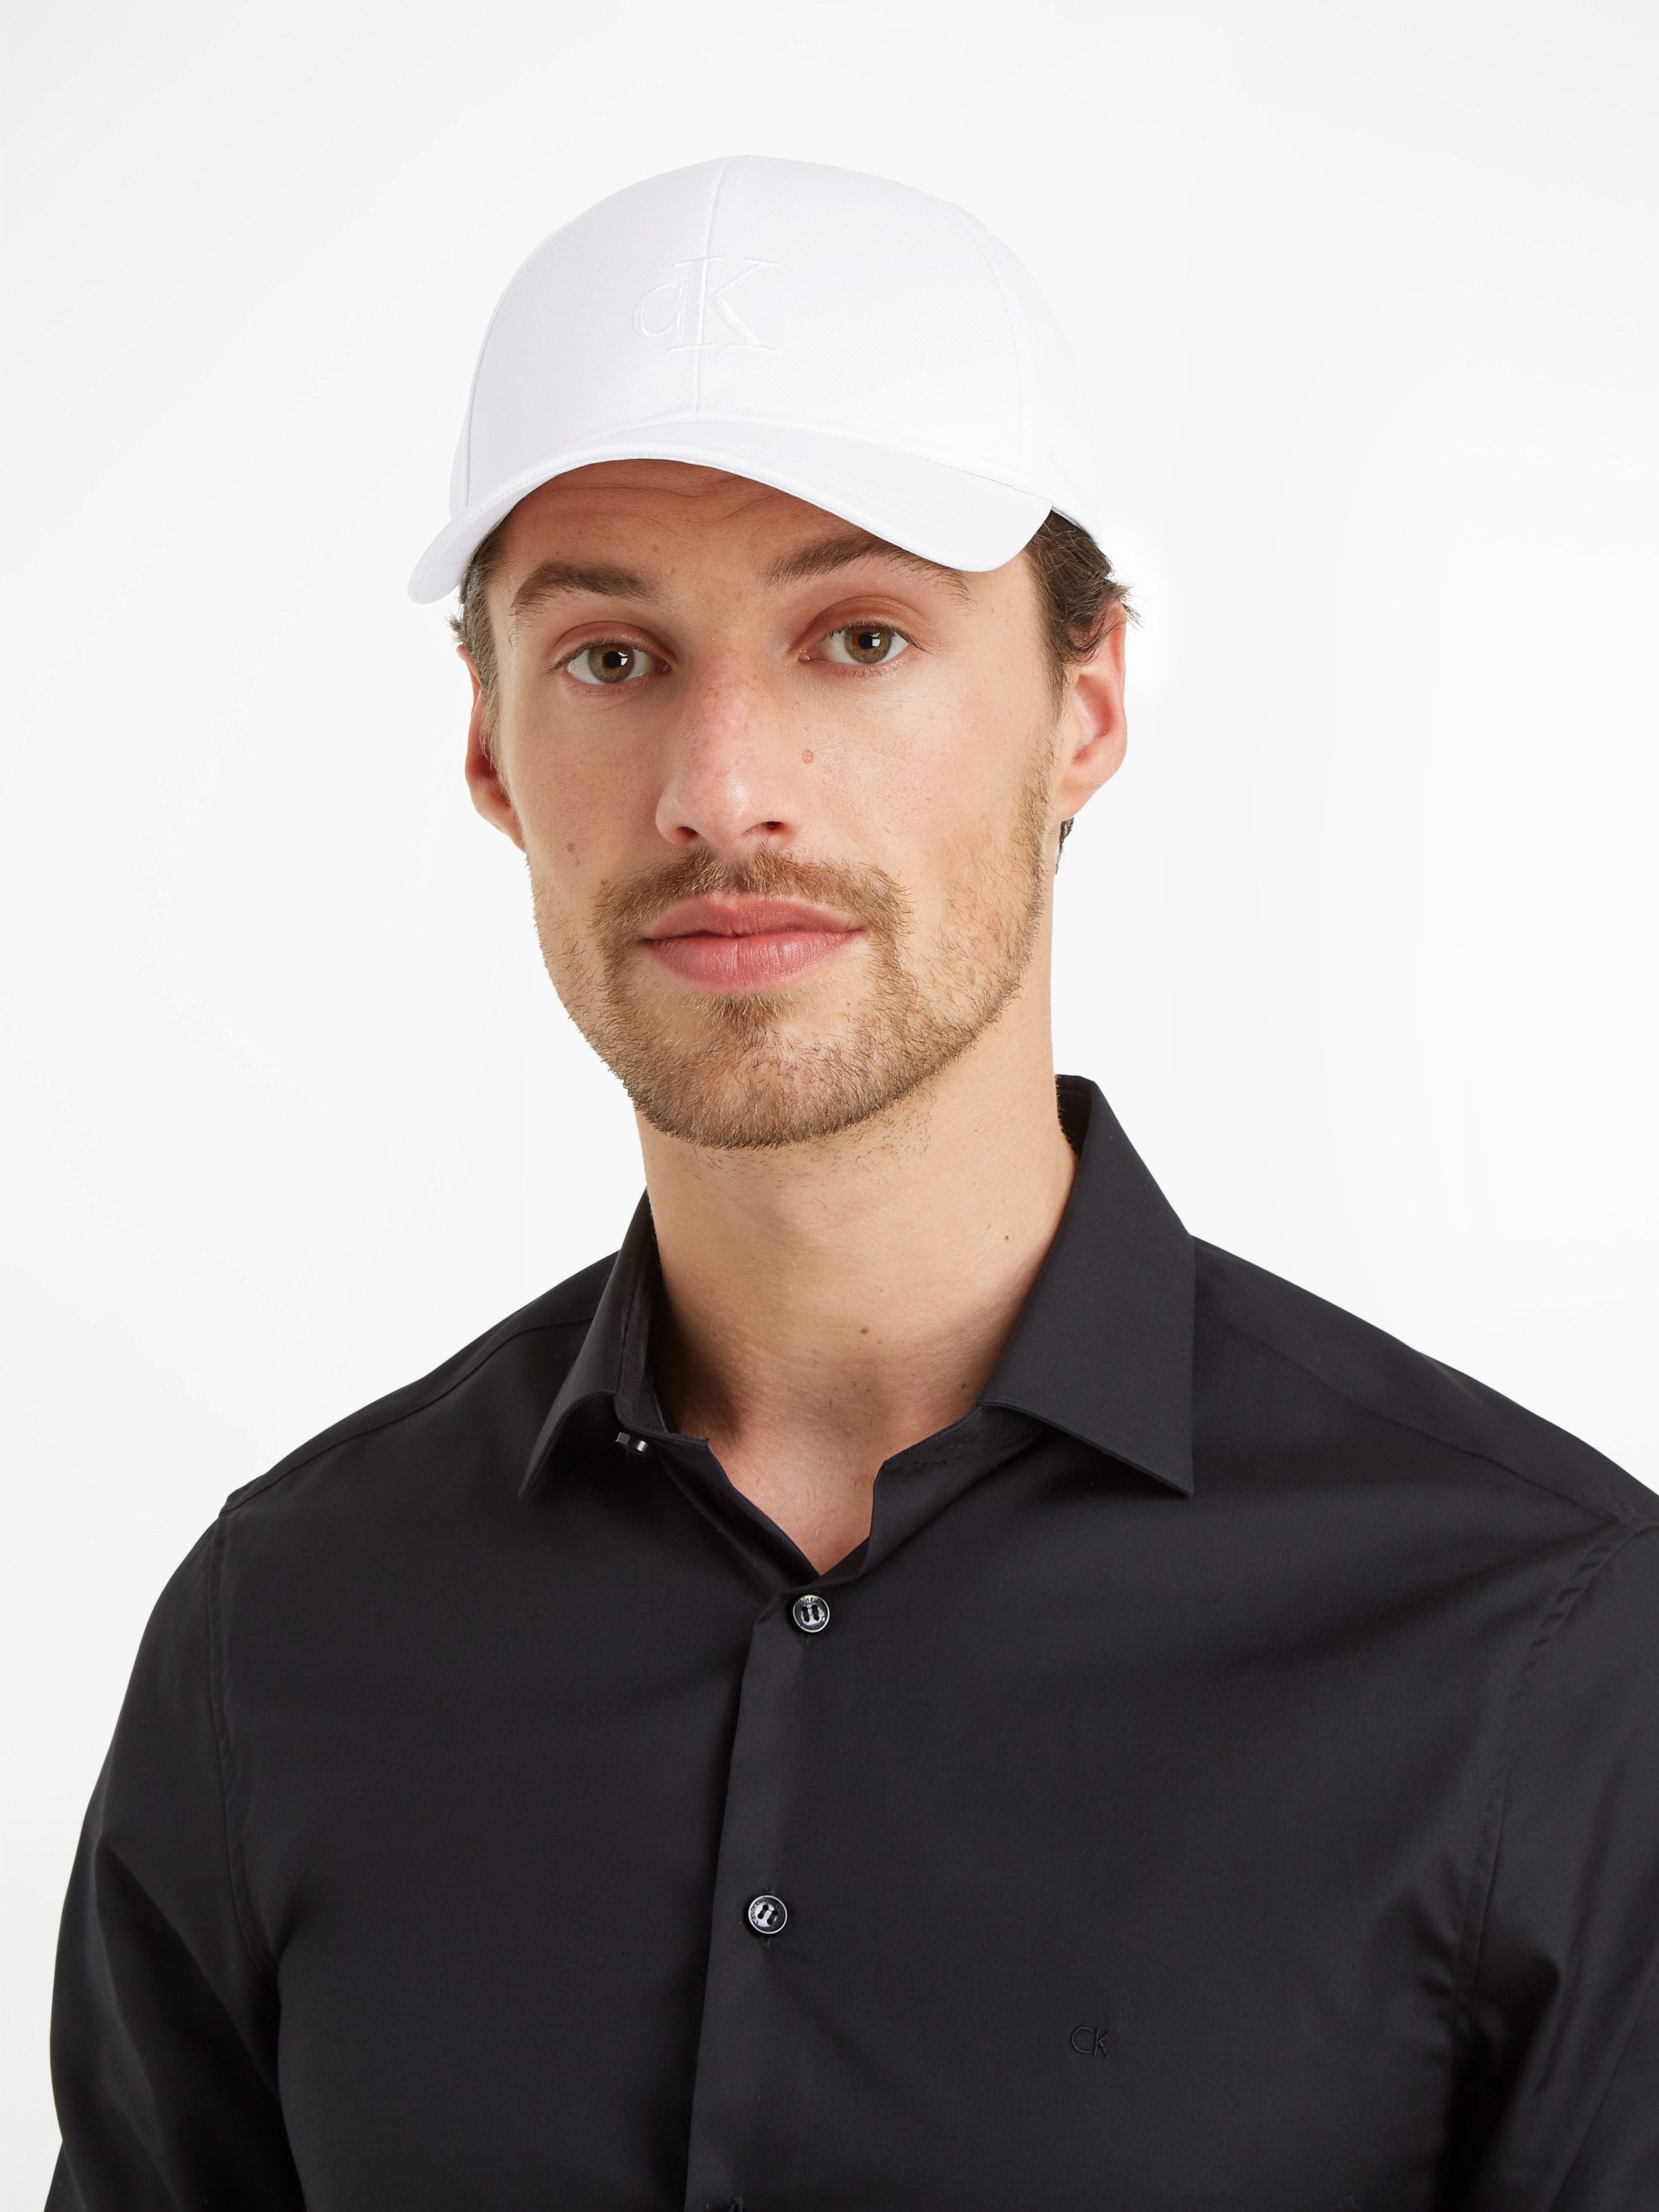 Calvin Klein Snapback cap